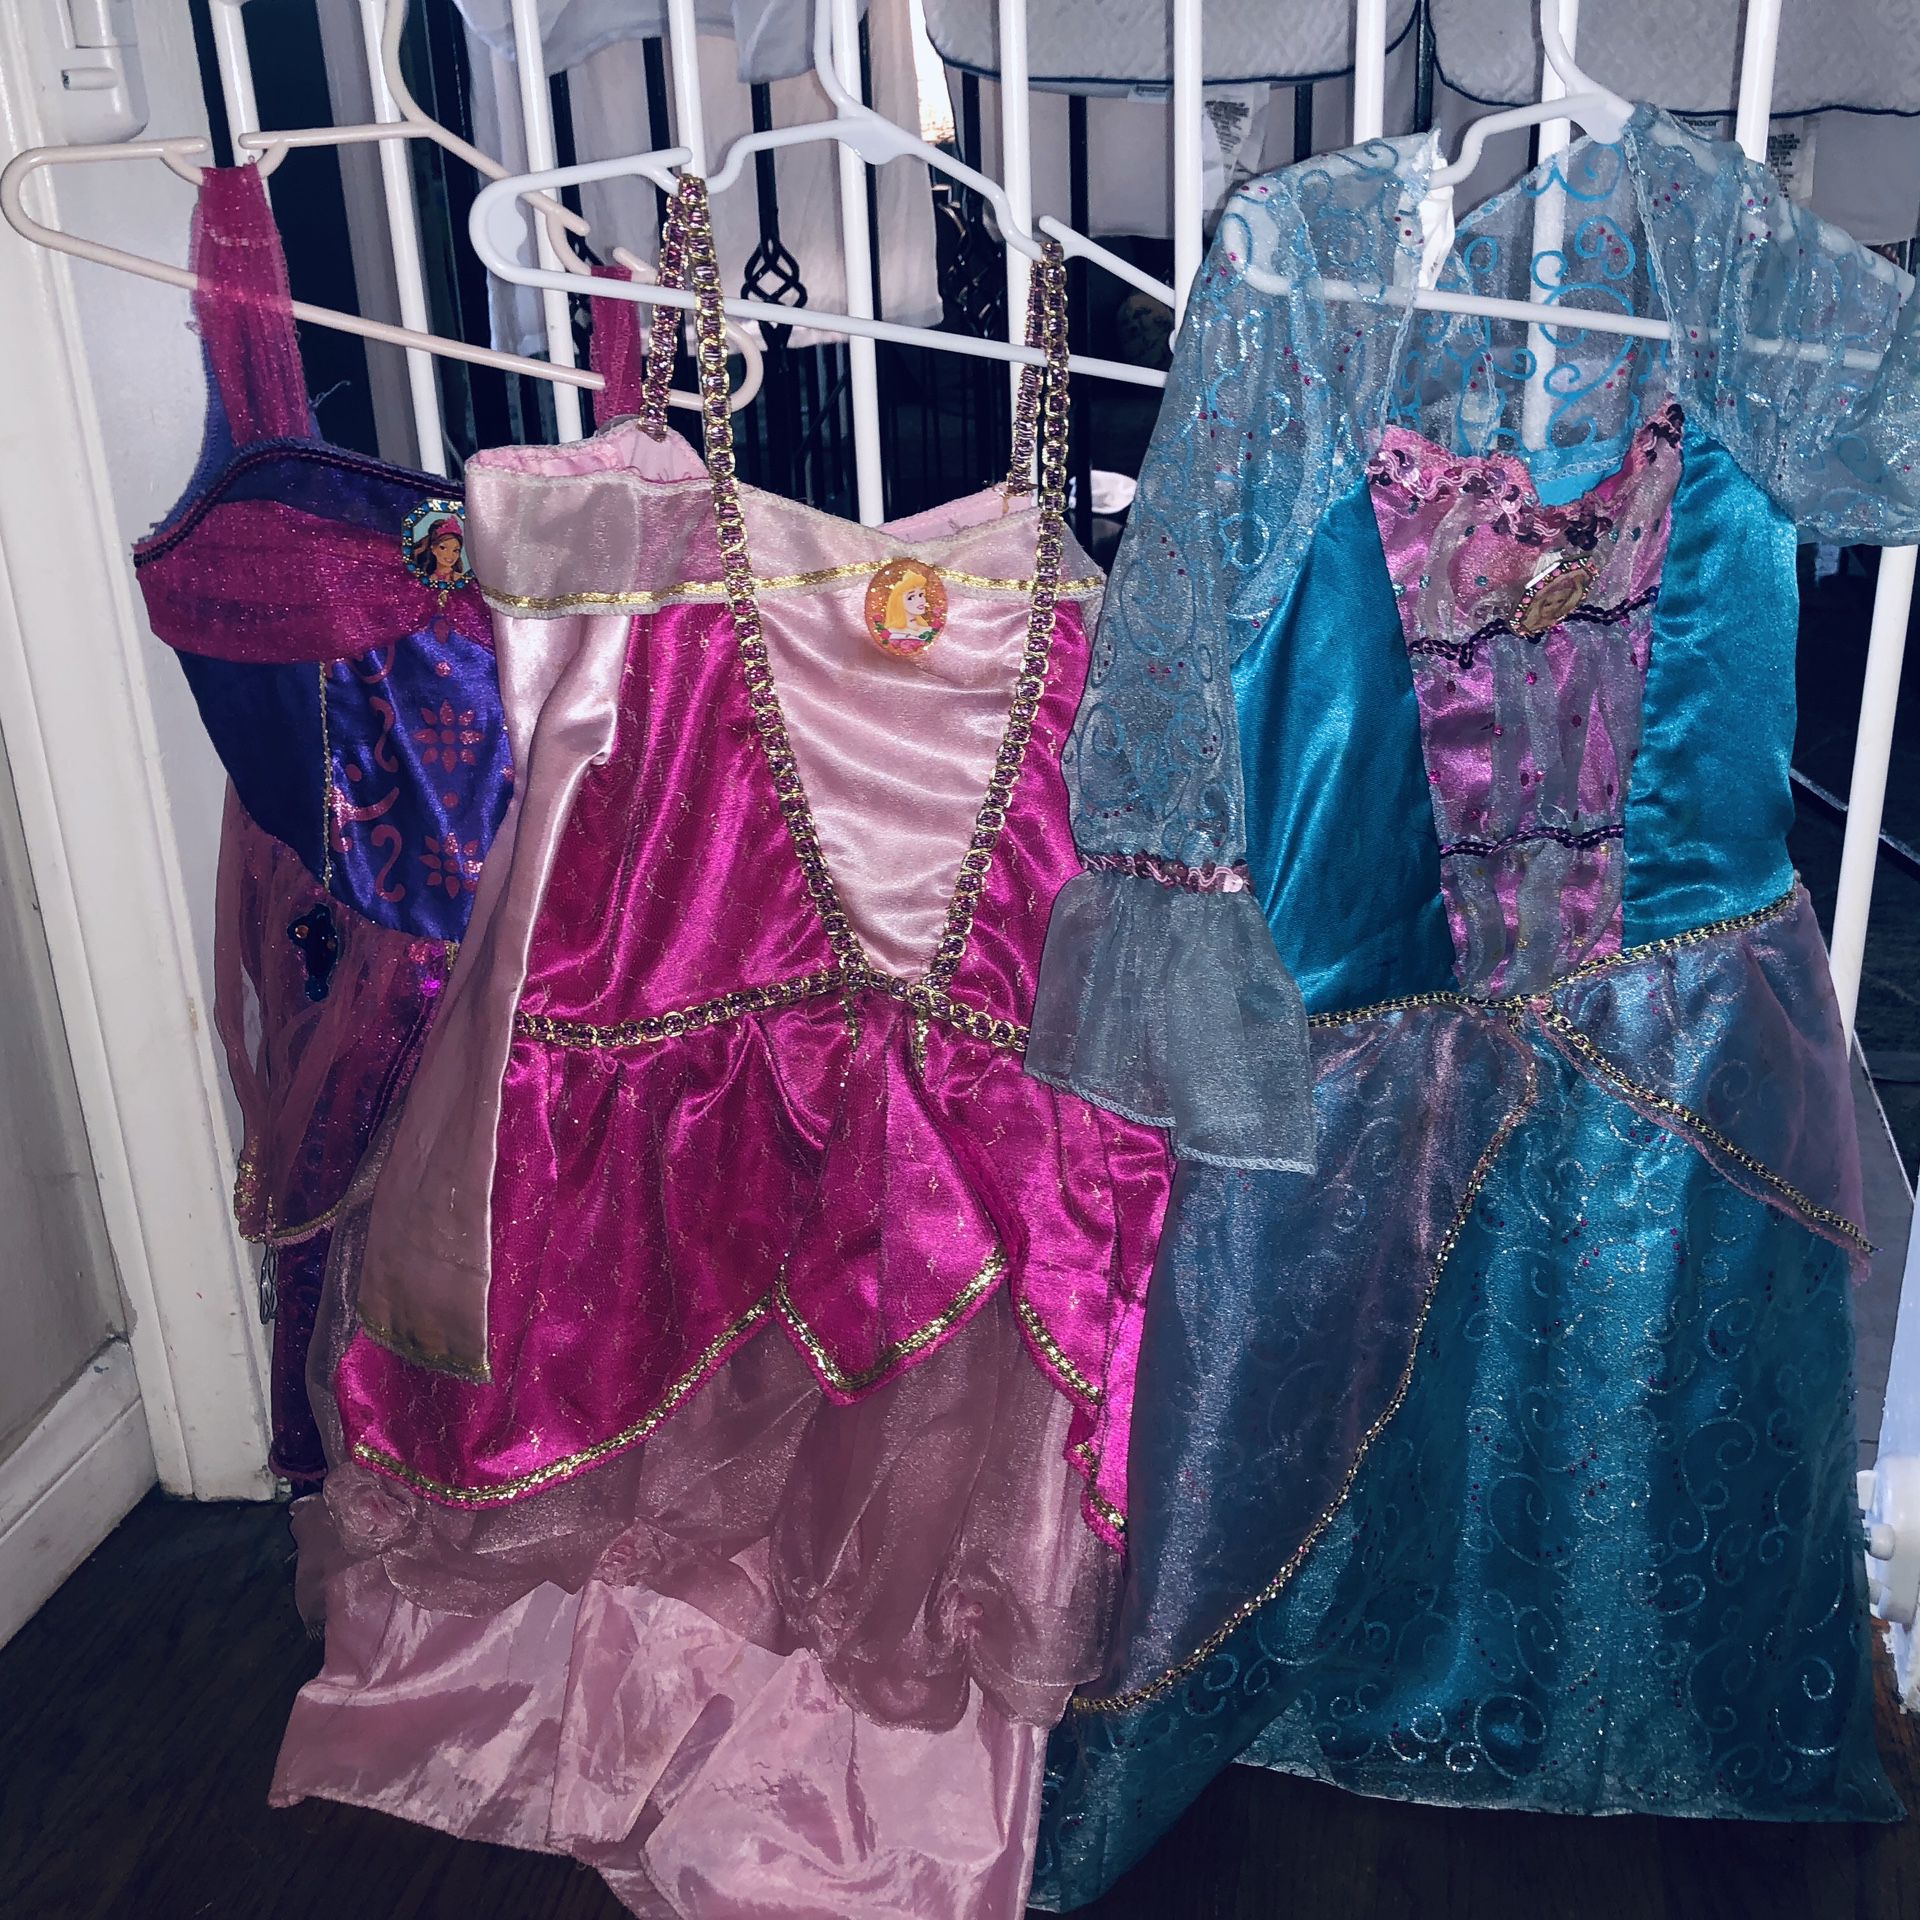 Princess costumes - various sizes